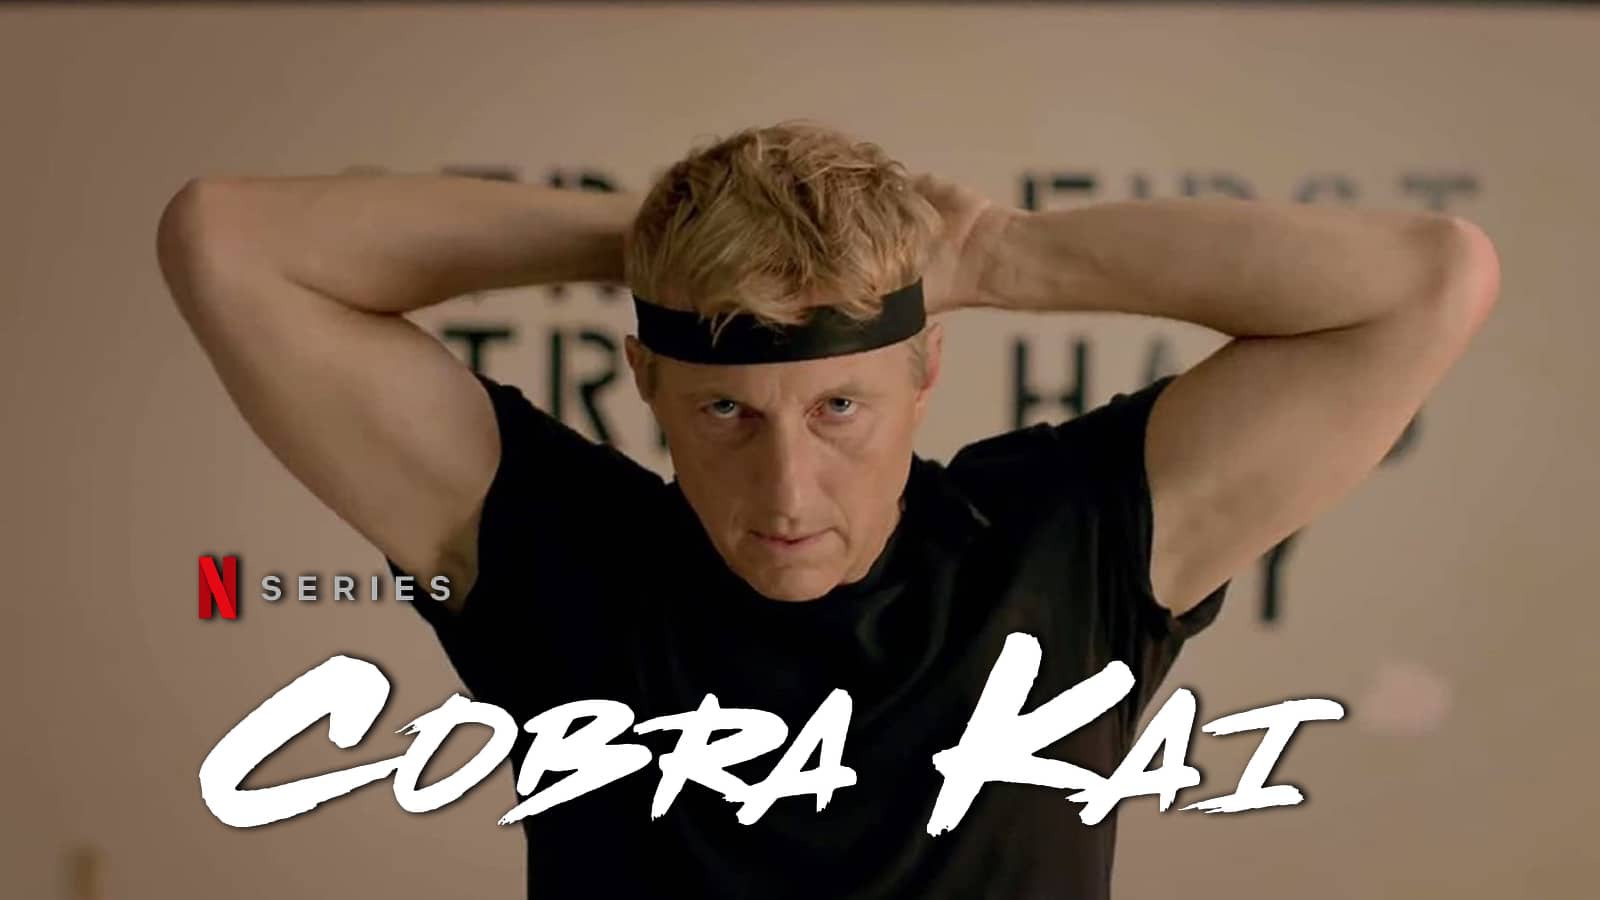 An image of William Zabka in Cobra Kai